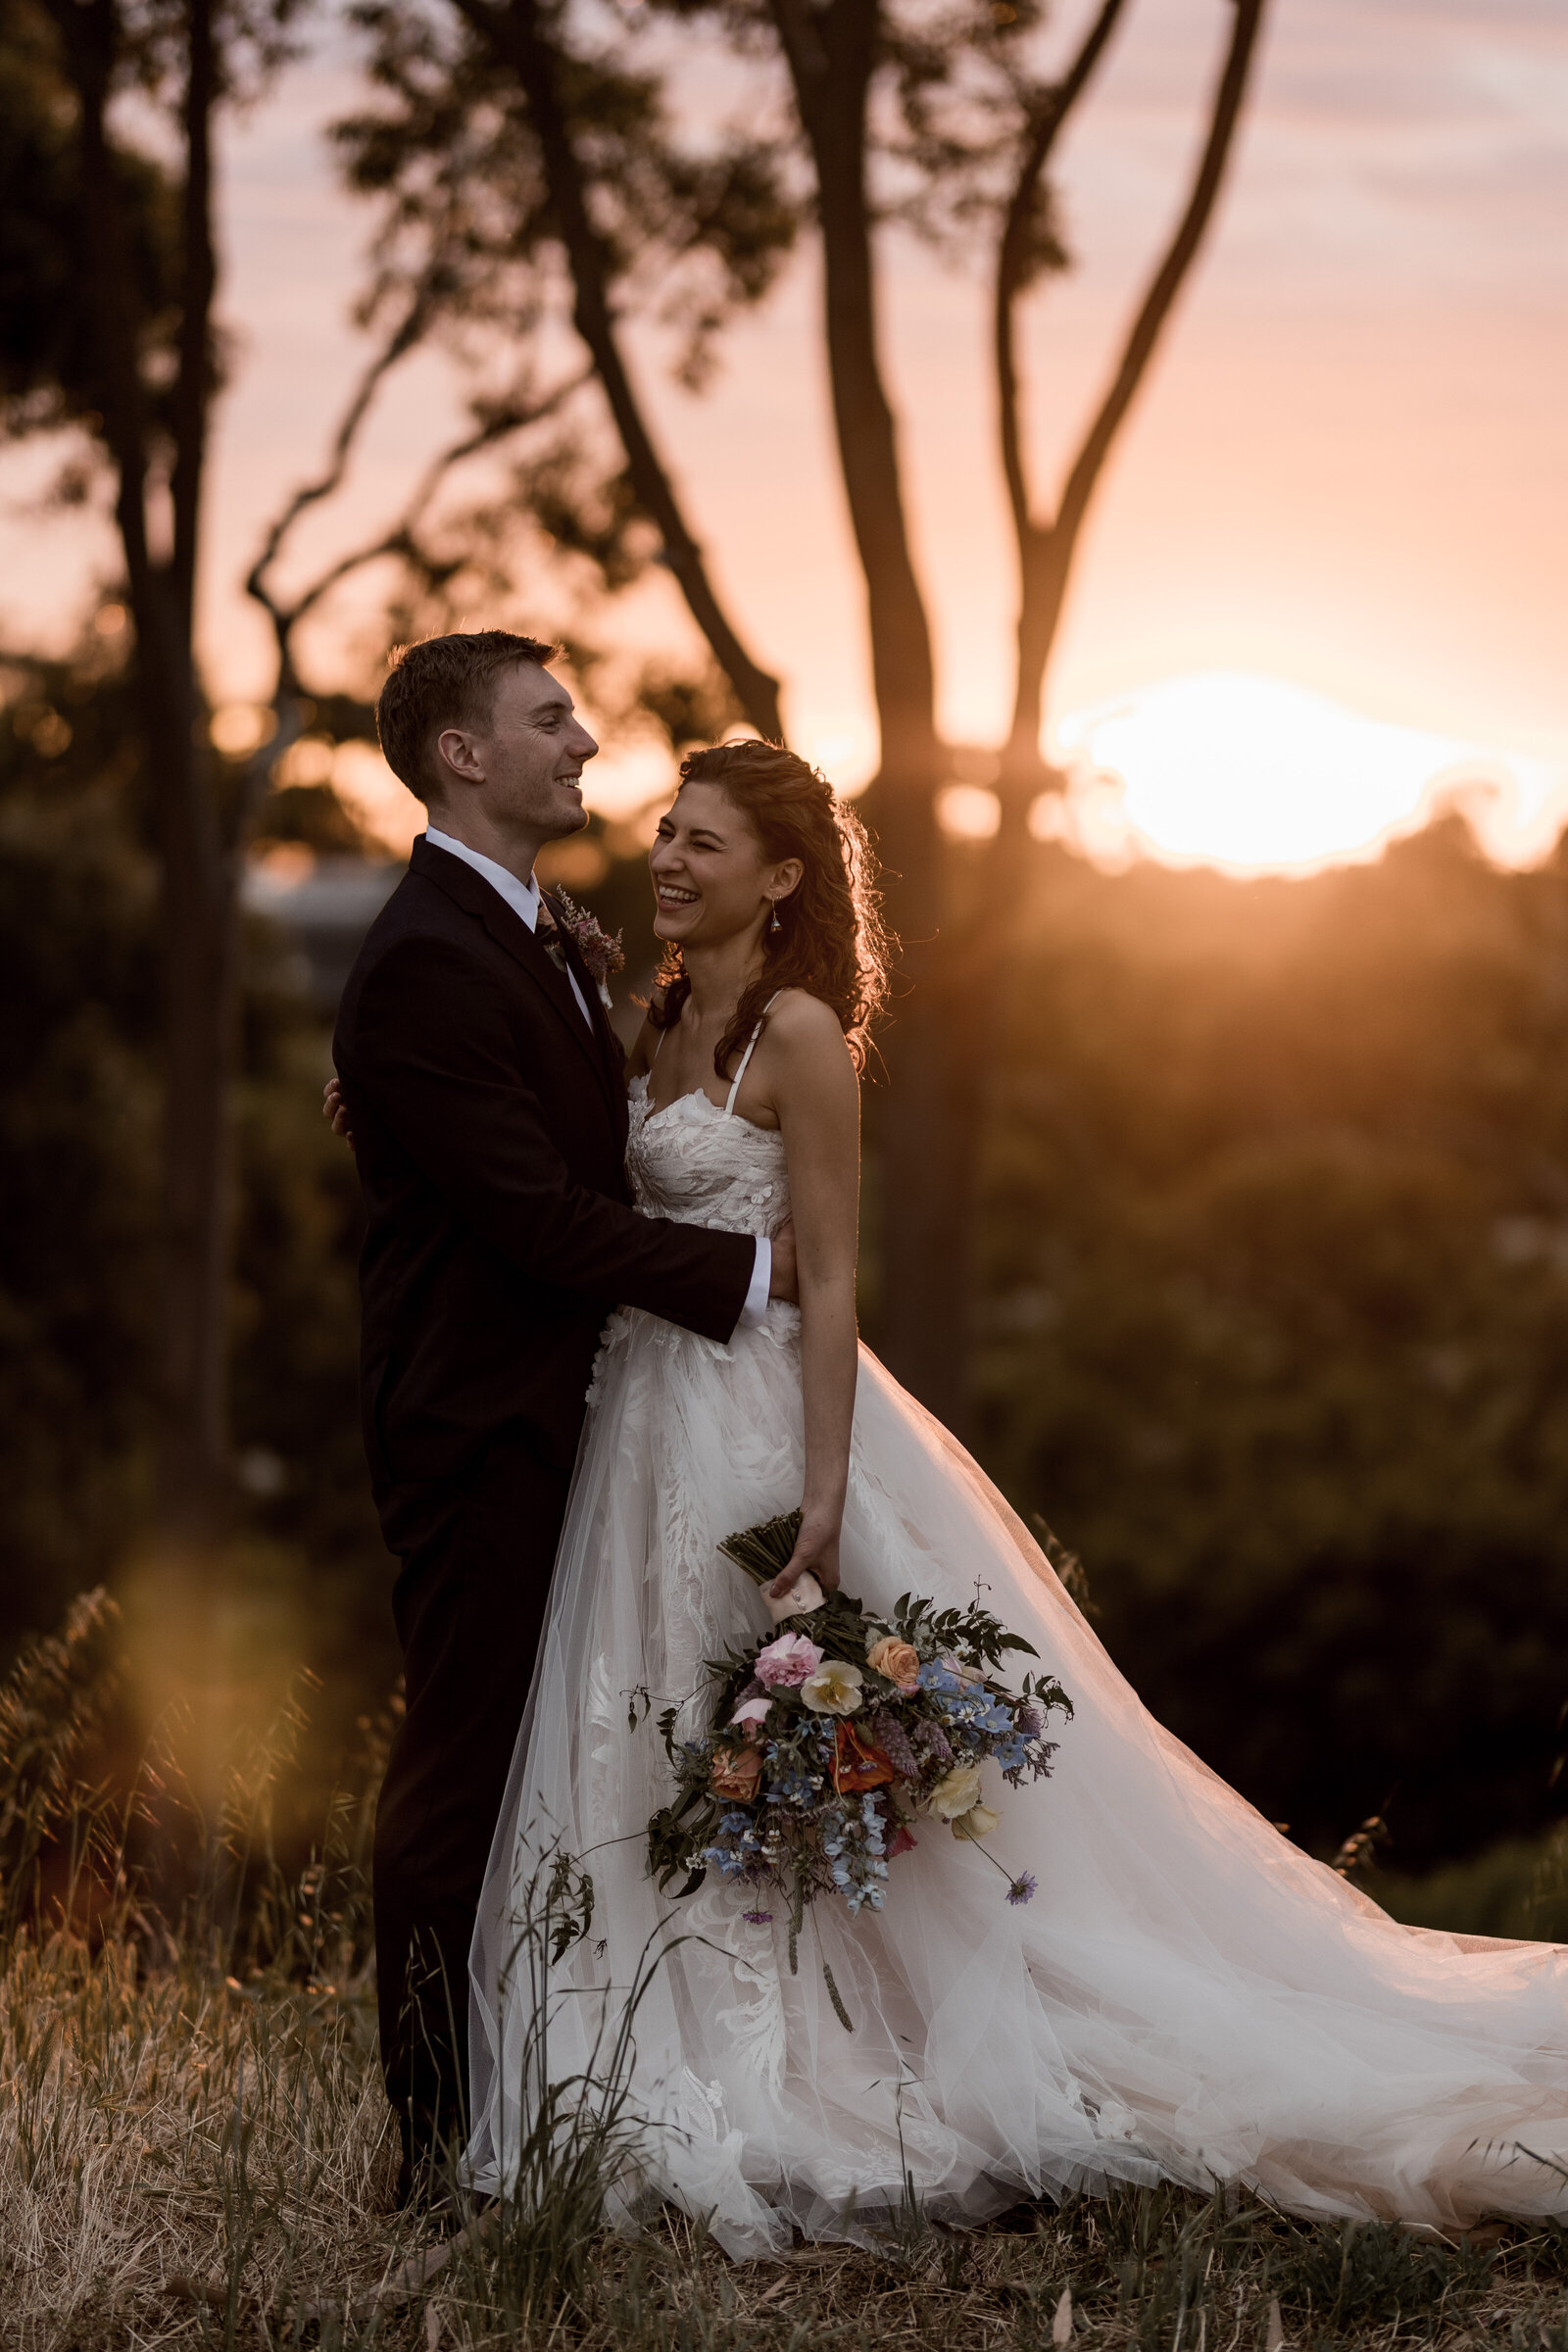 Emily-Ben-Rexvil-Photography-Adelaide-Wedding-Photographer-541